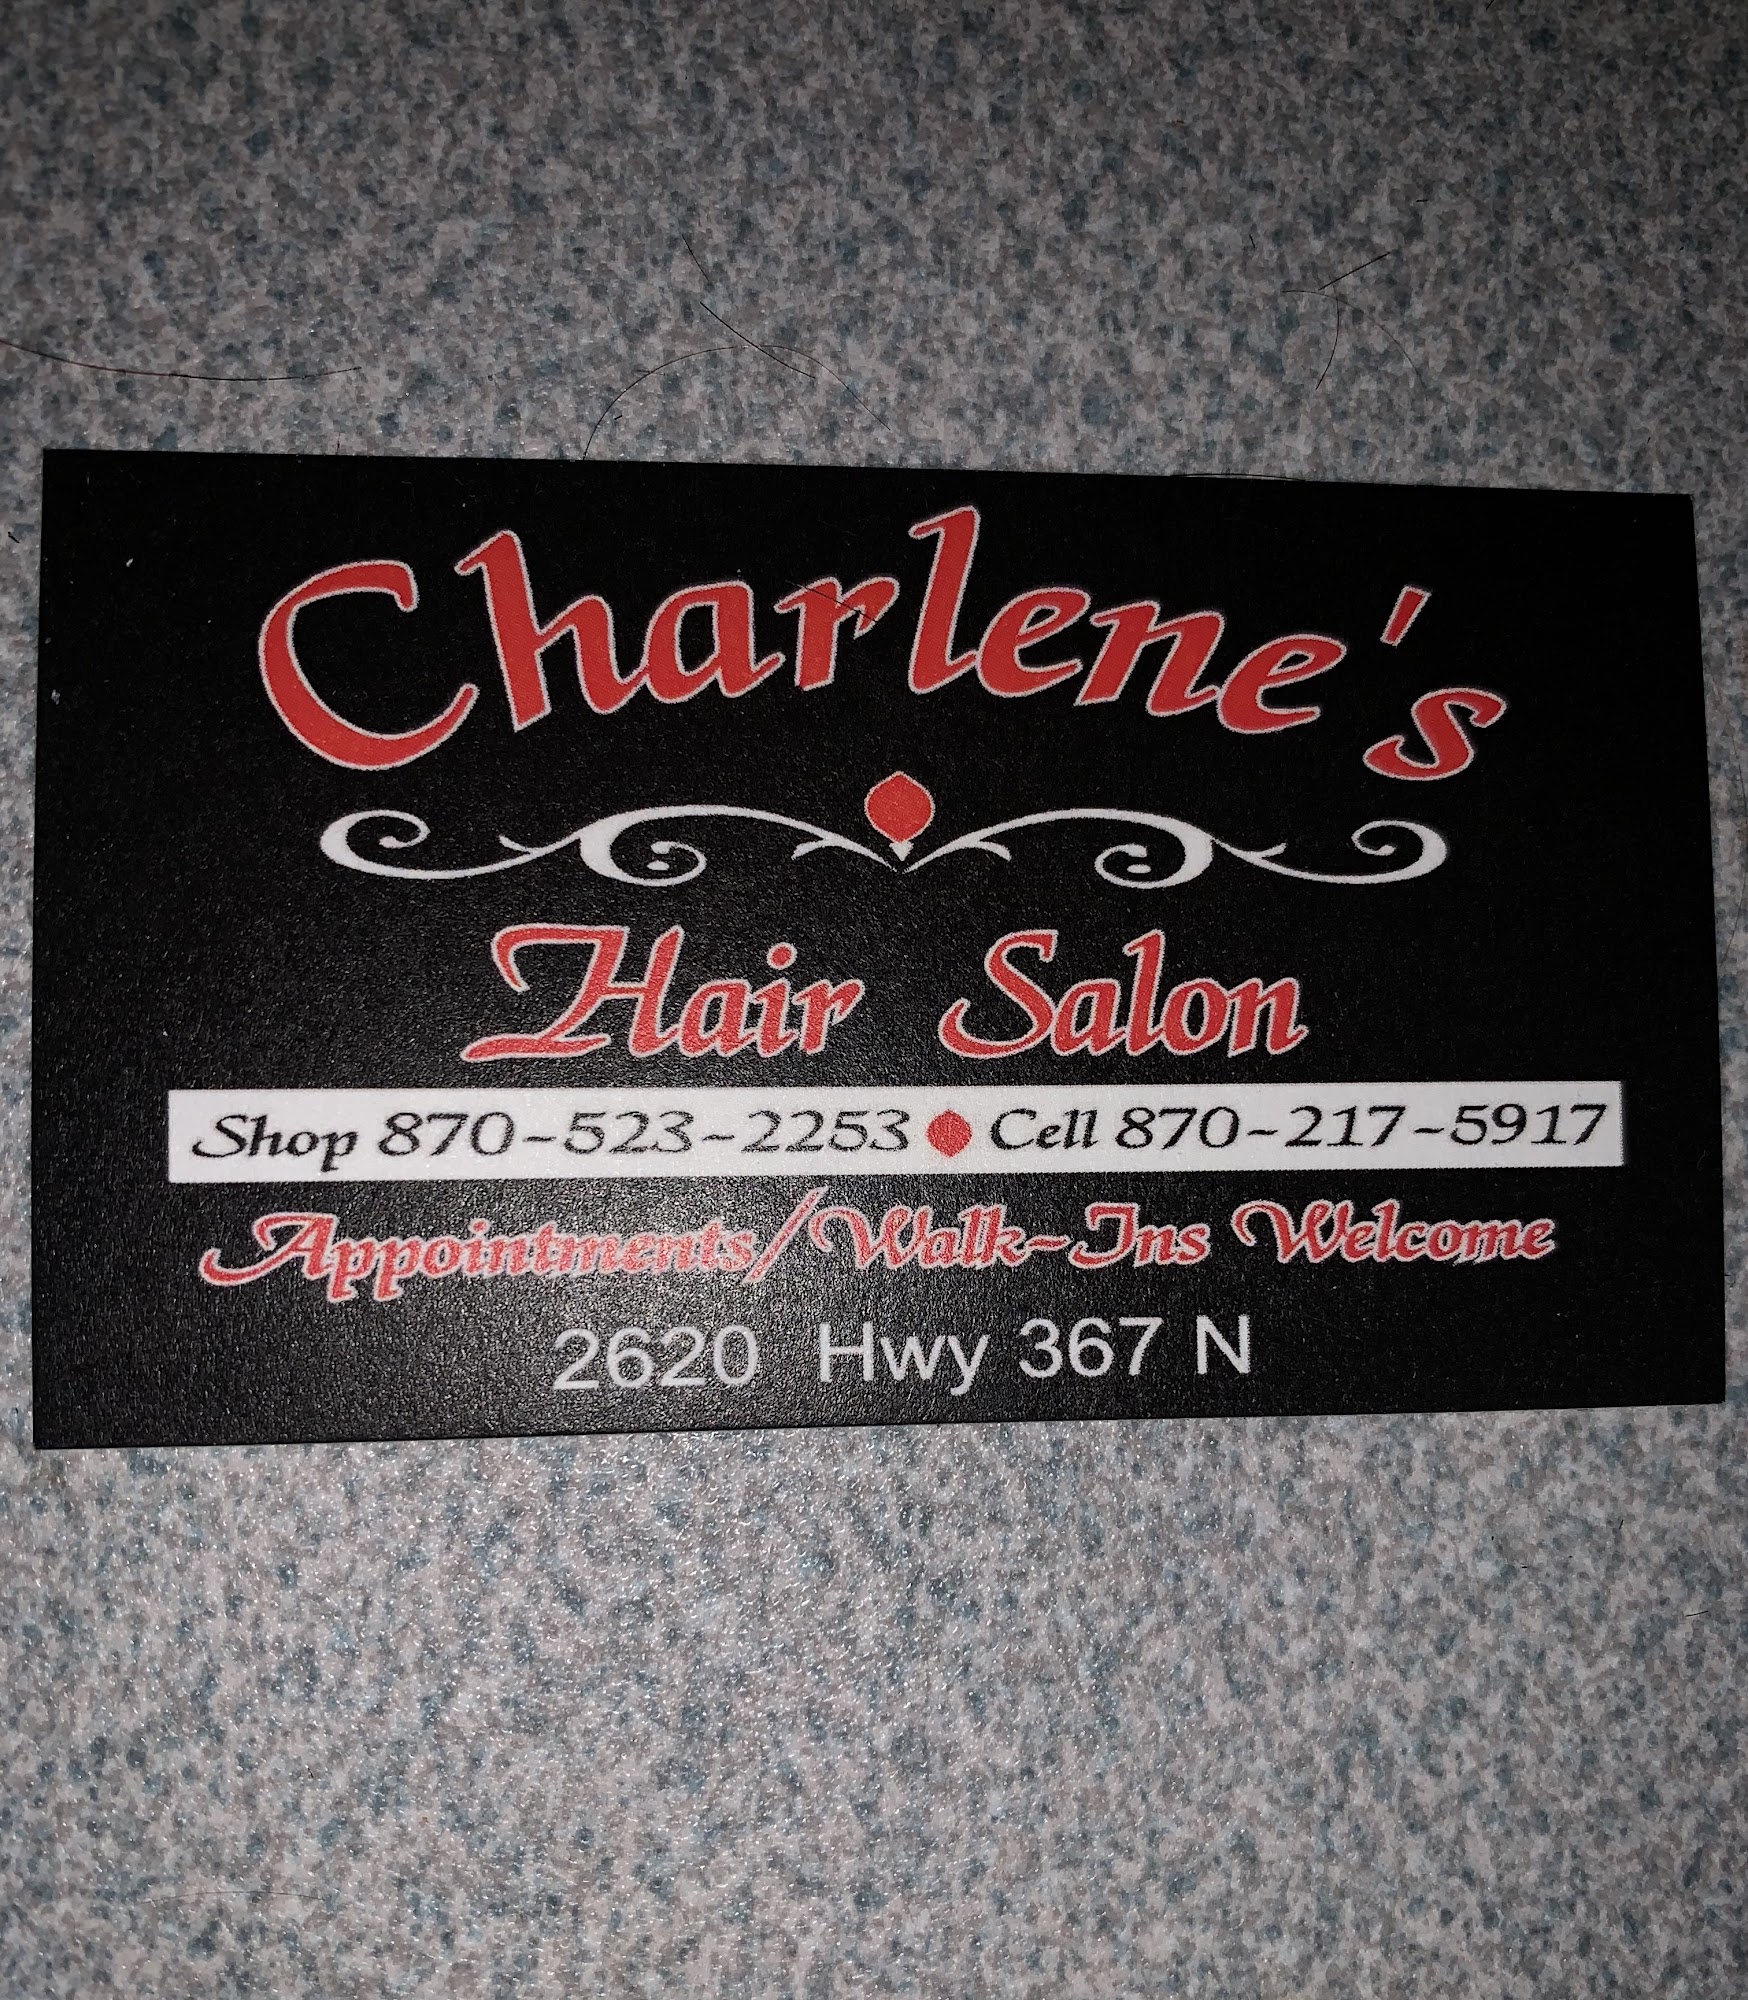 Charlene's Hair Salon 2620 AR-367, Newport Arkansas 72112